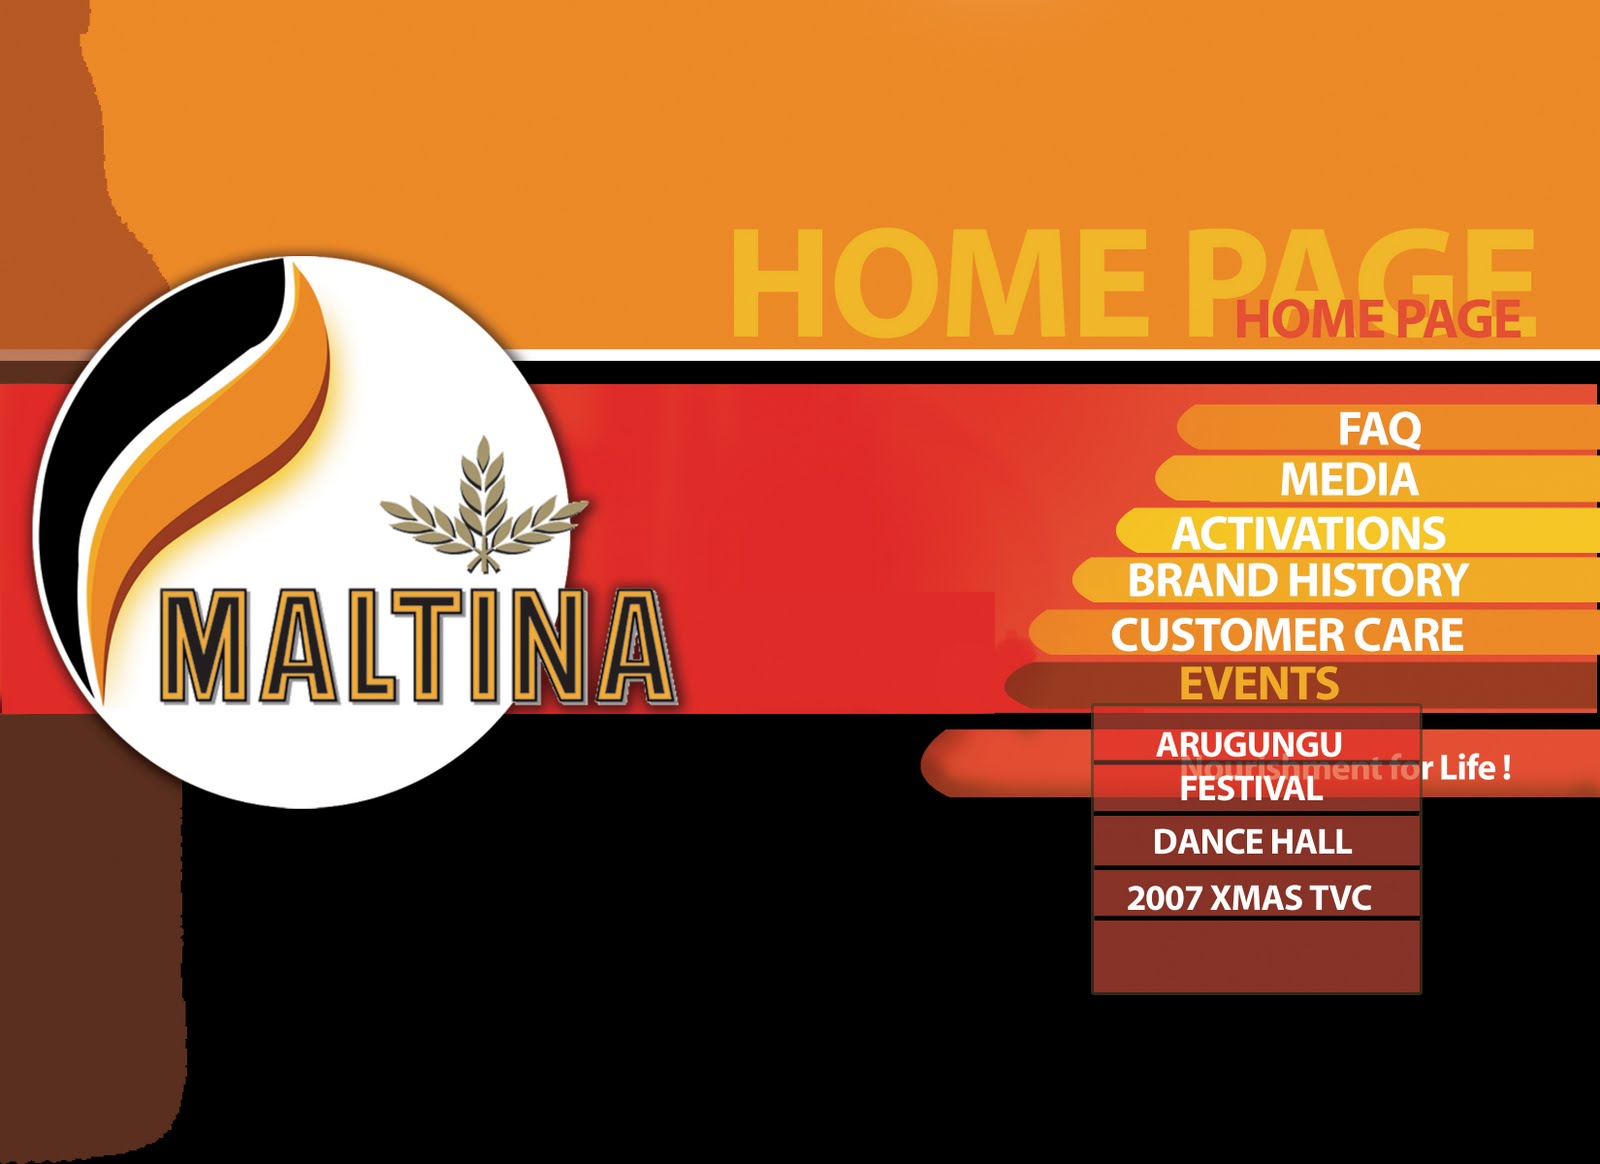 [MALTINA-HOME-PAGE.jpg]